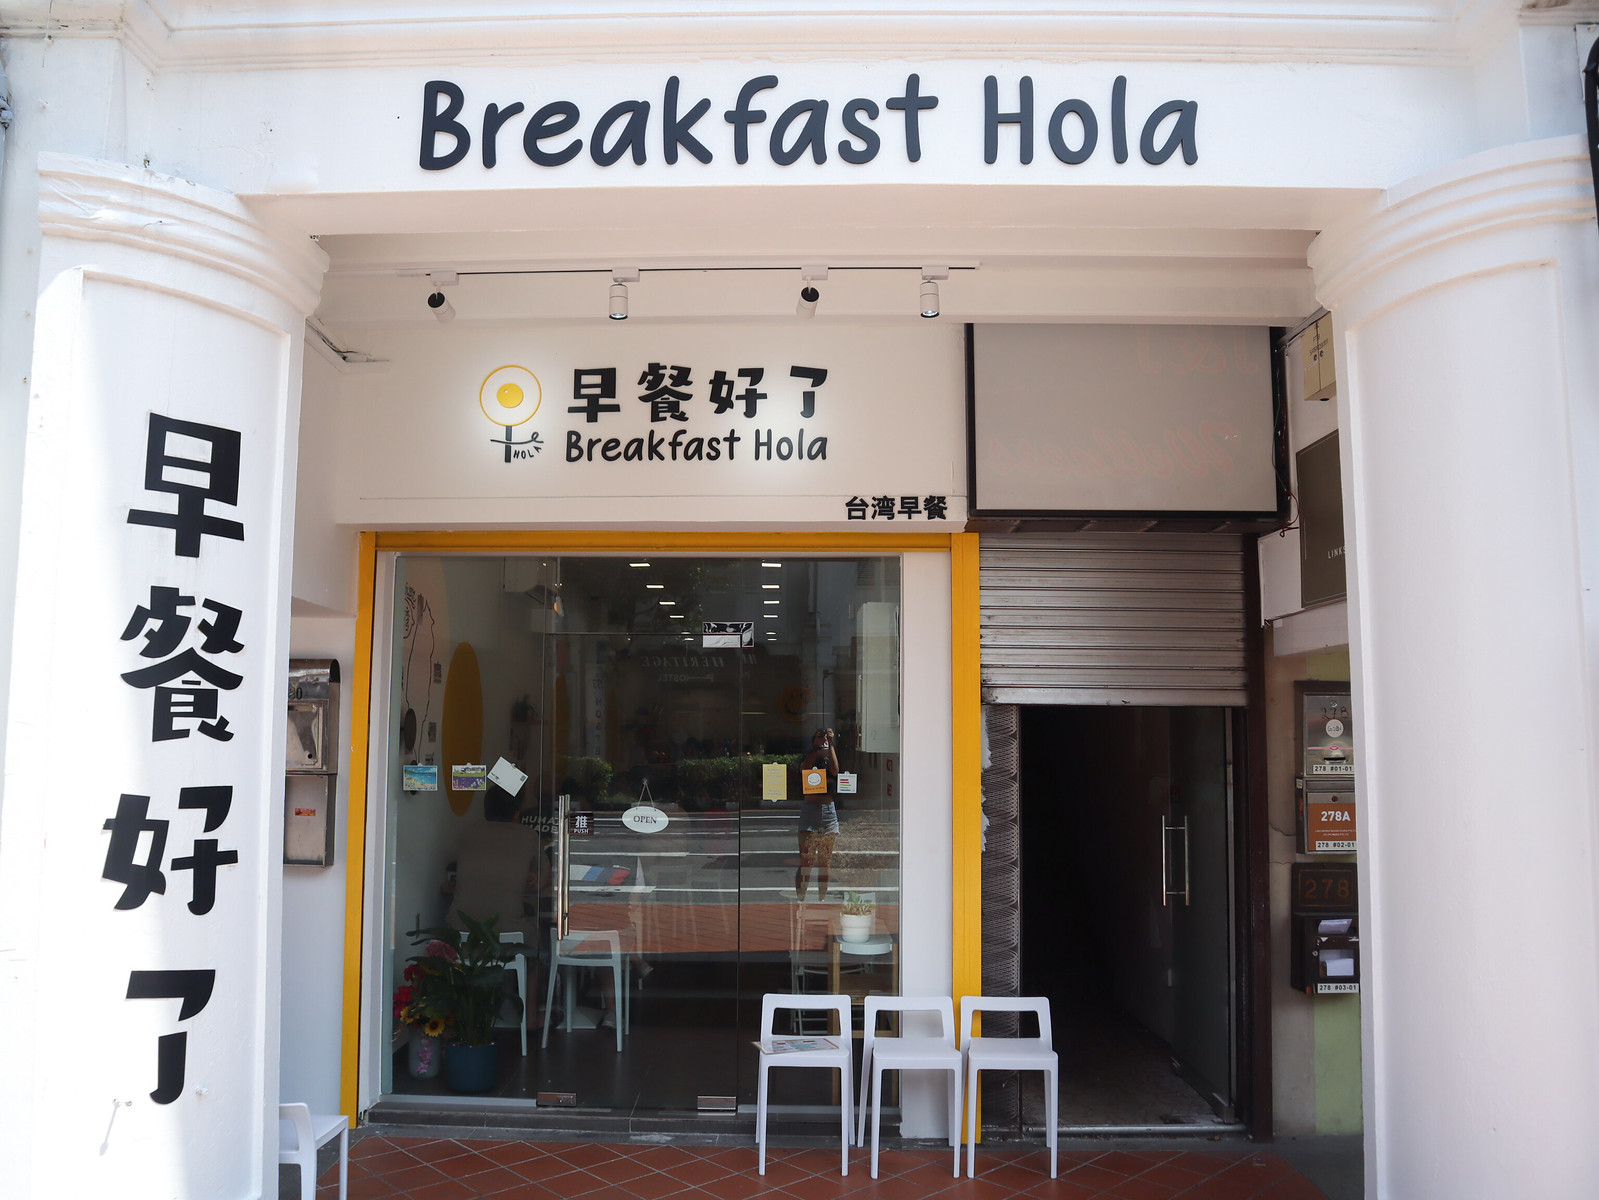 Breakfast Hola - storefront